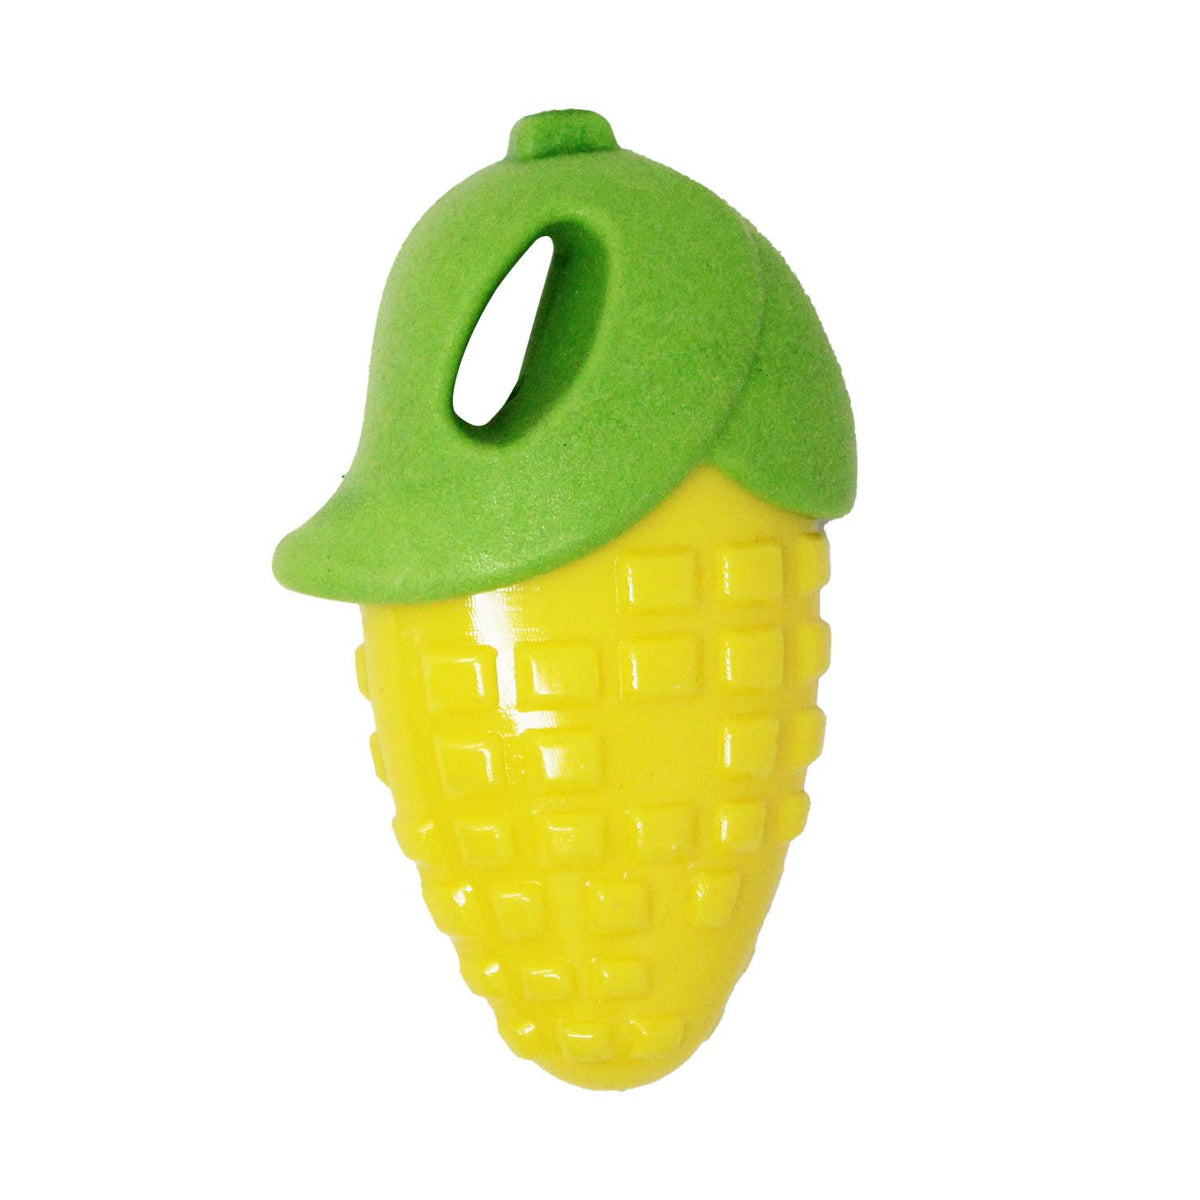 Gearbuff Corny chew Teething Toy, Corn